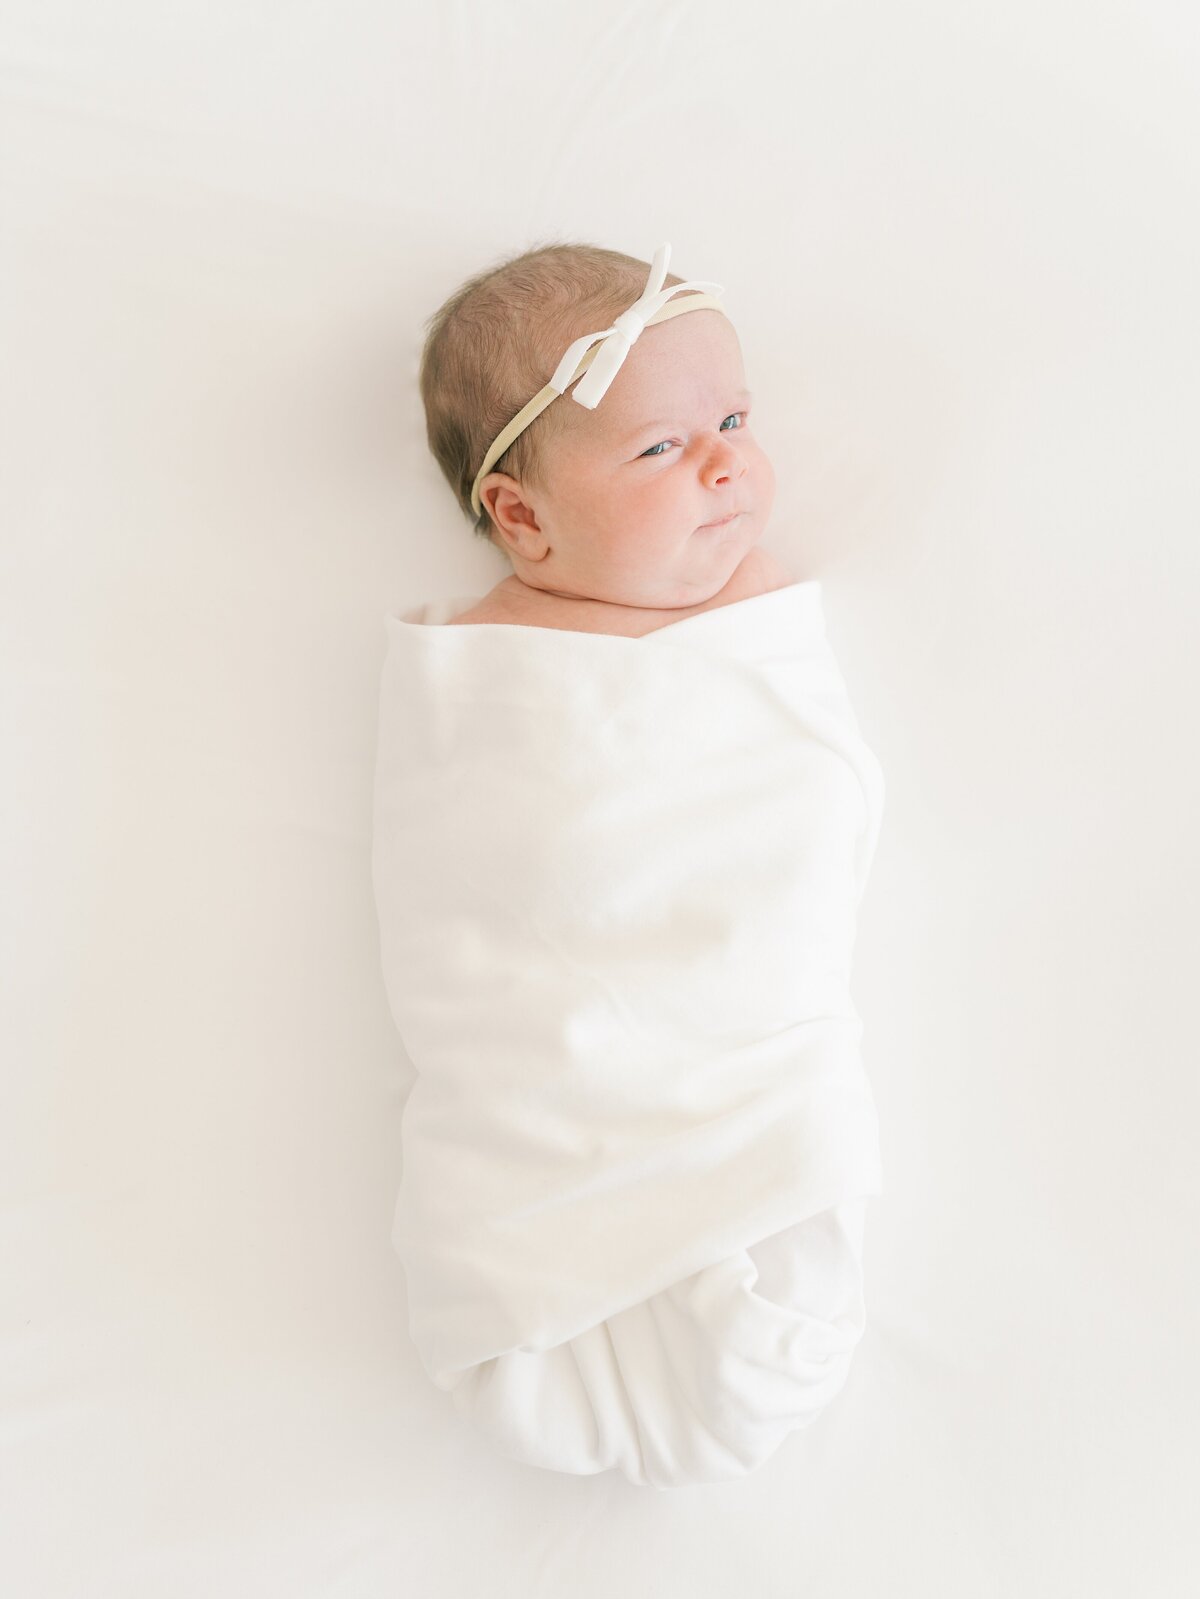 northern-virginia-newborn-photographer-studio-photos-6-1